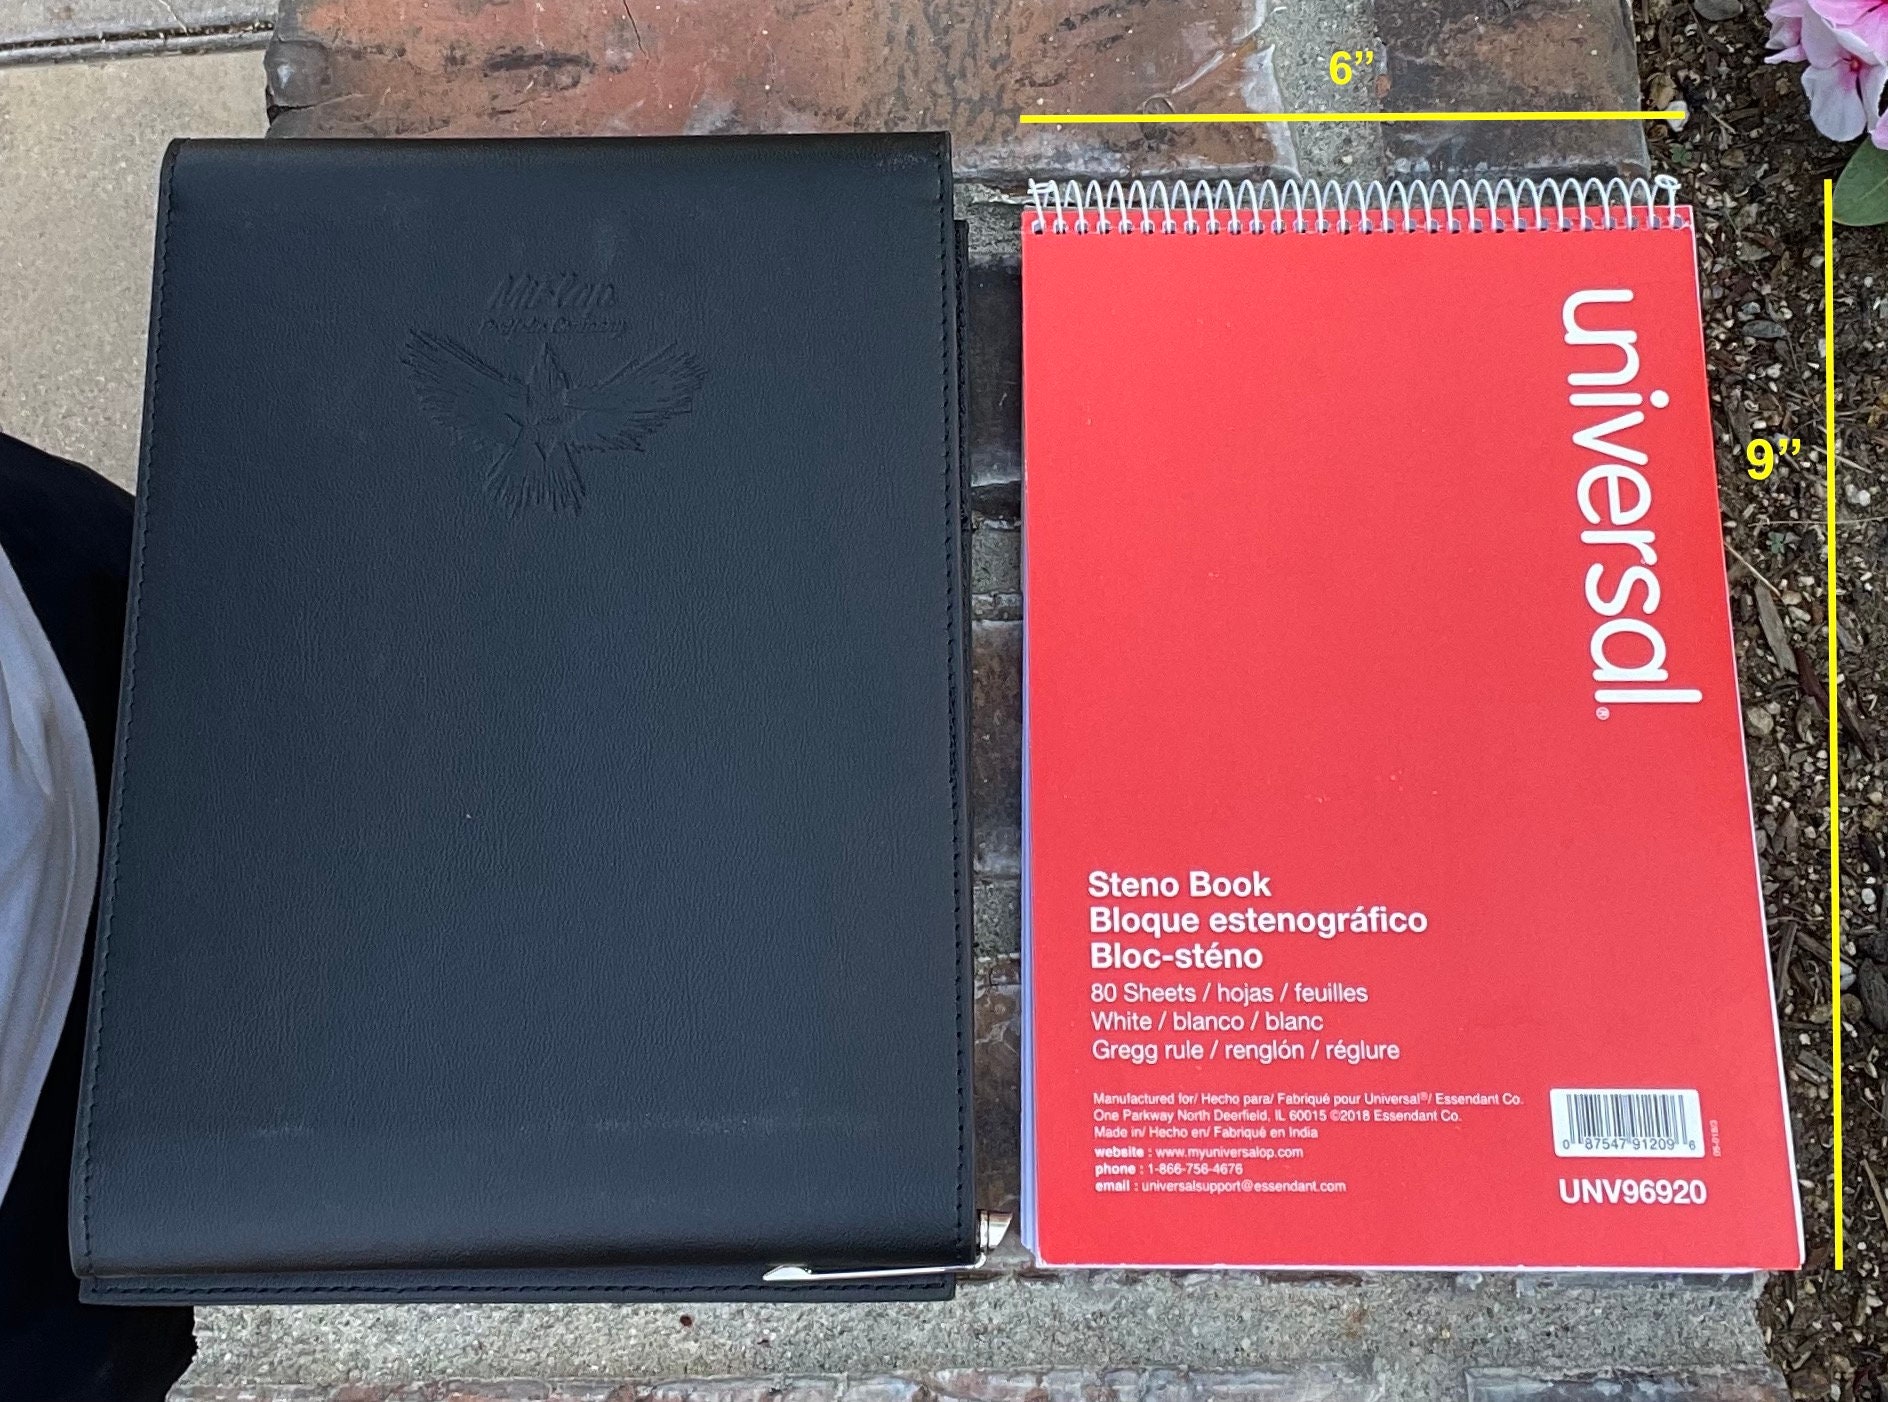 Distressed Leather A5 Moleskine Artist Brush Pencil Organizer Case